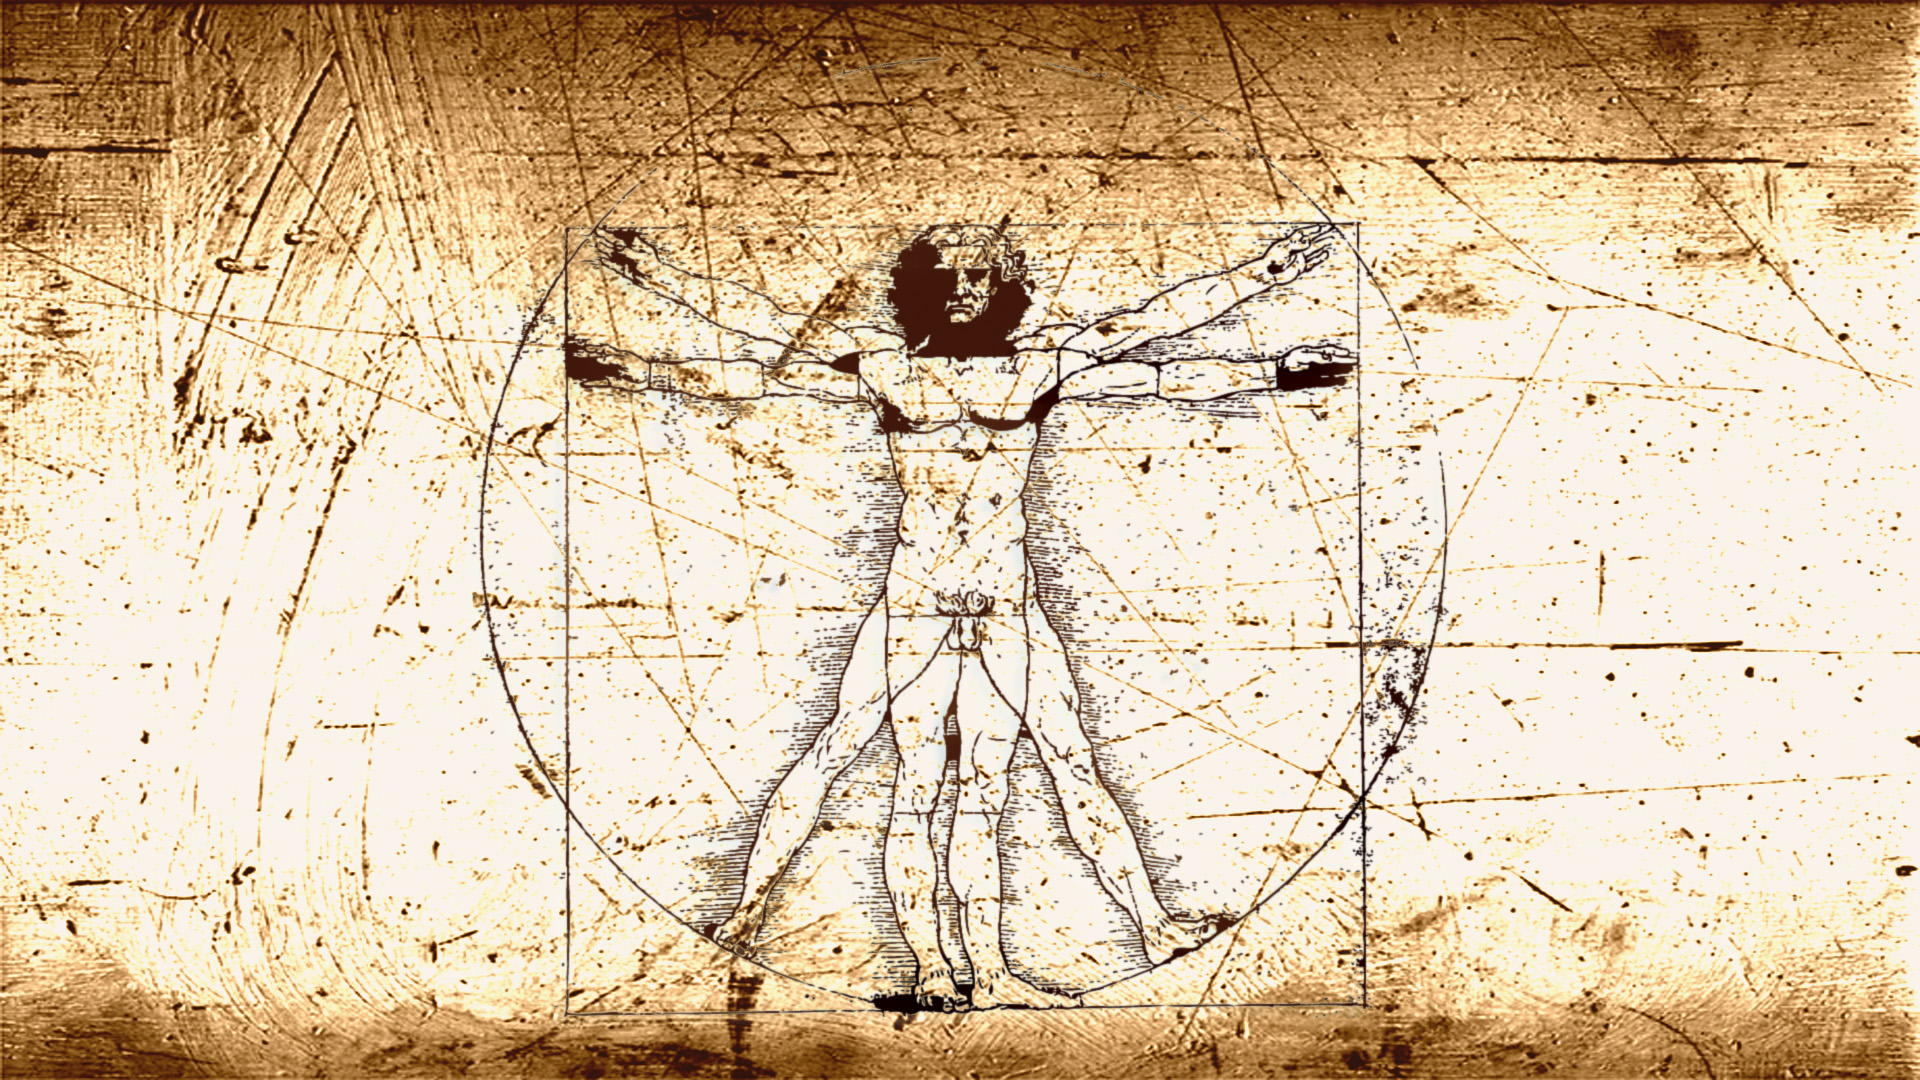 Man Wallpaper Art Widescreen Leonardo Da Vinci